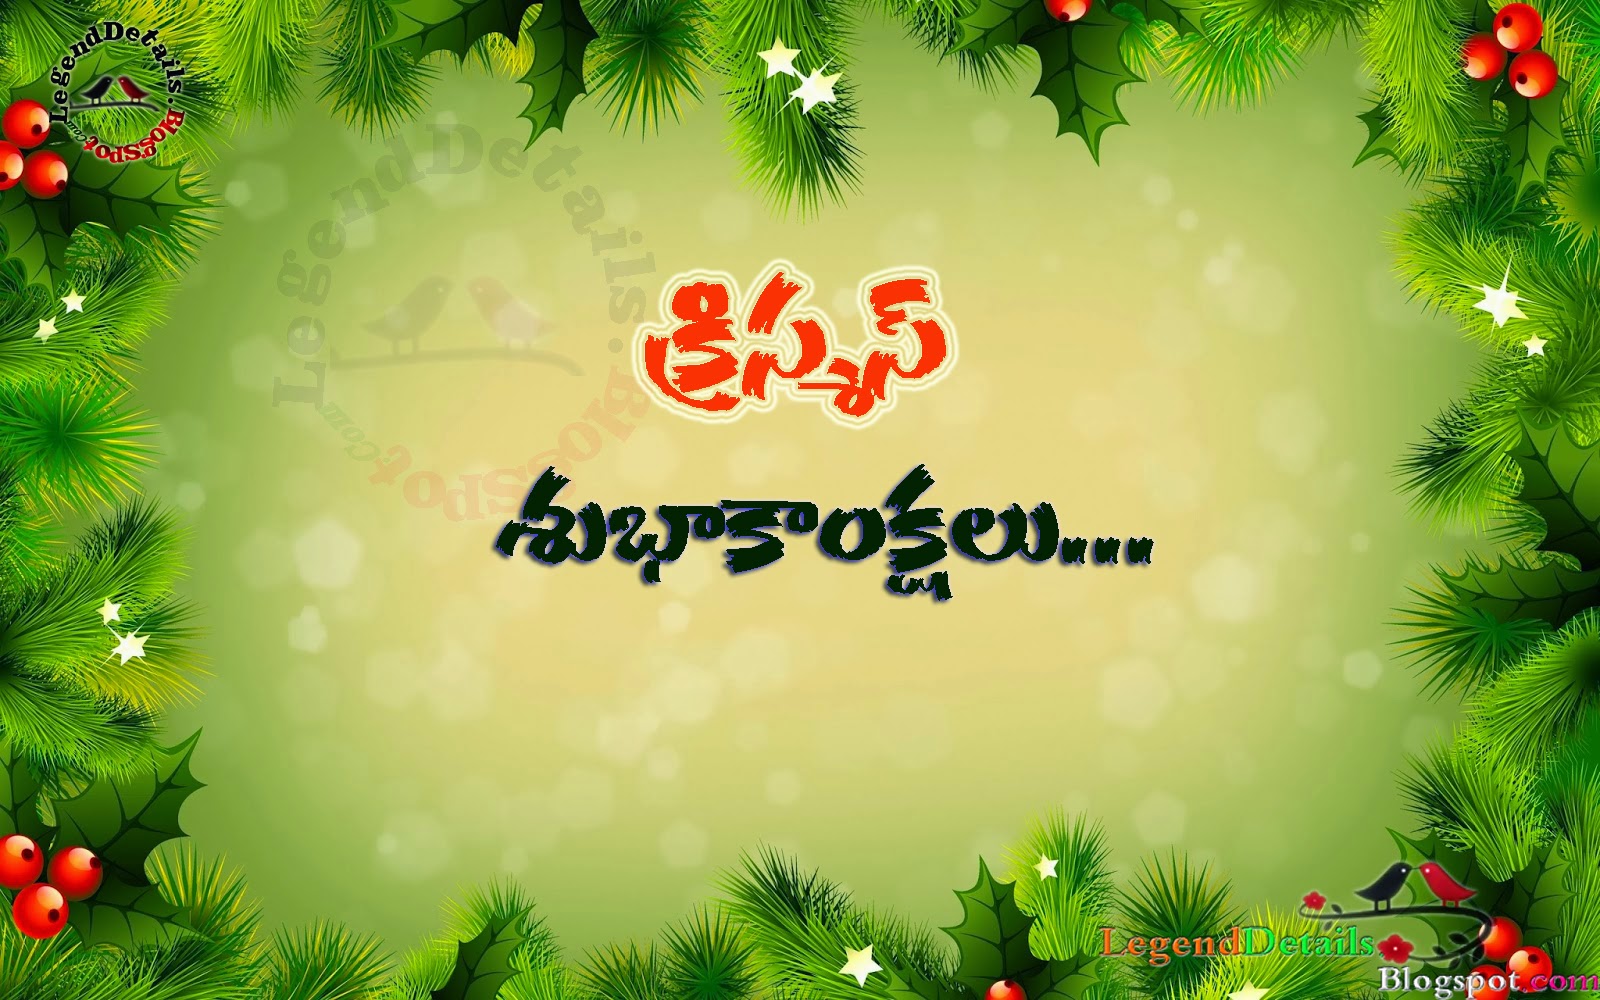 Telugu Christmas Greetings | Christmas Wishes Telugu | Legendary ...